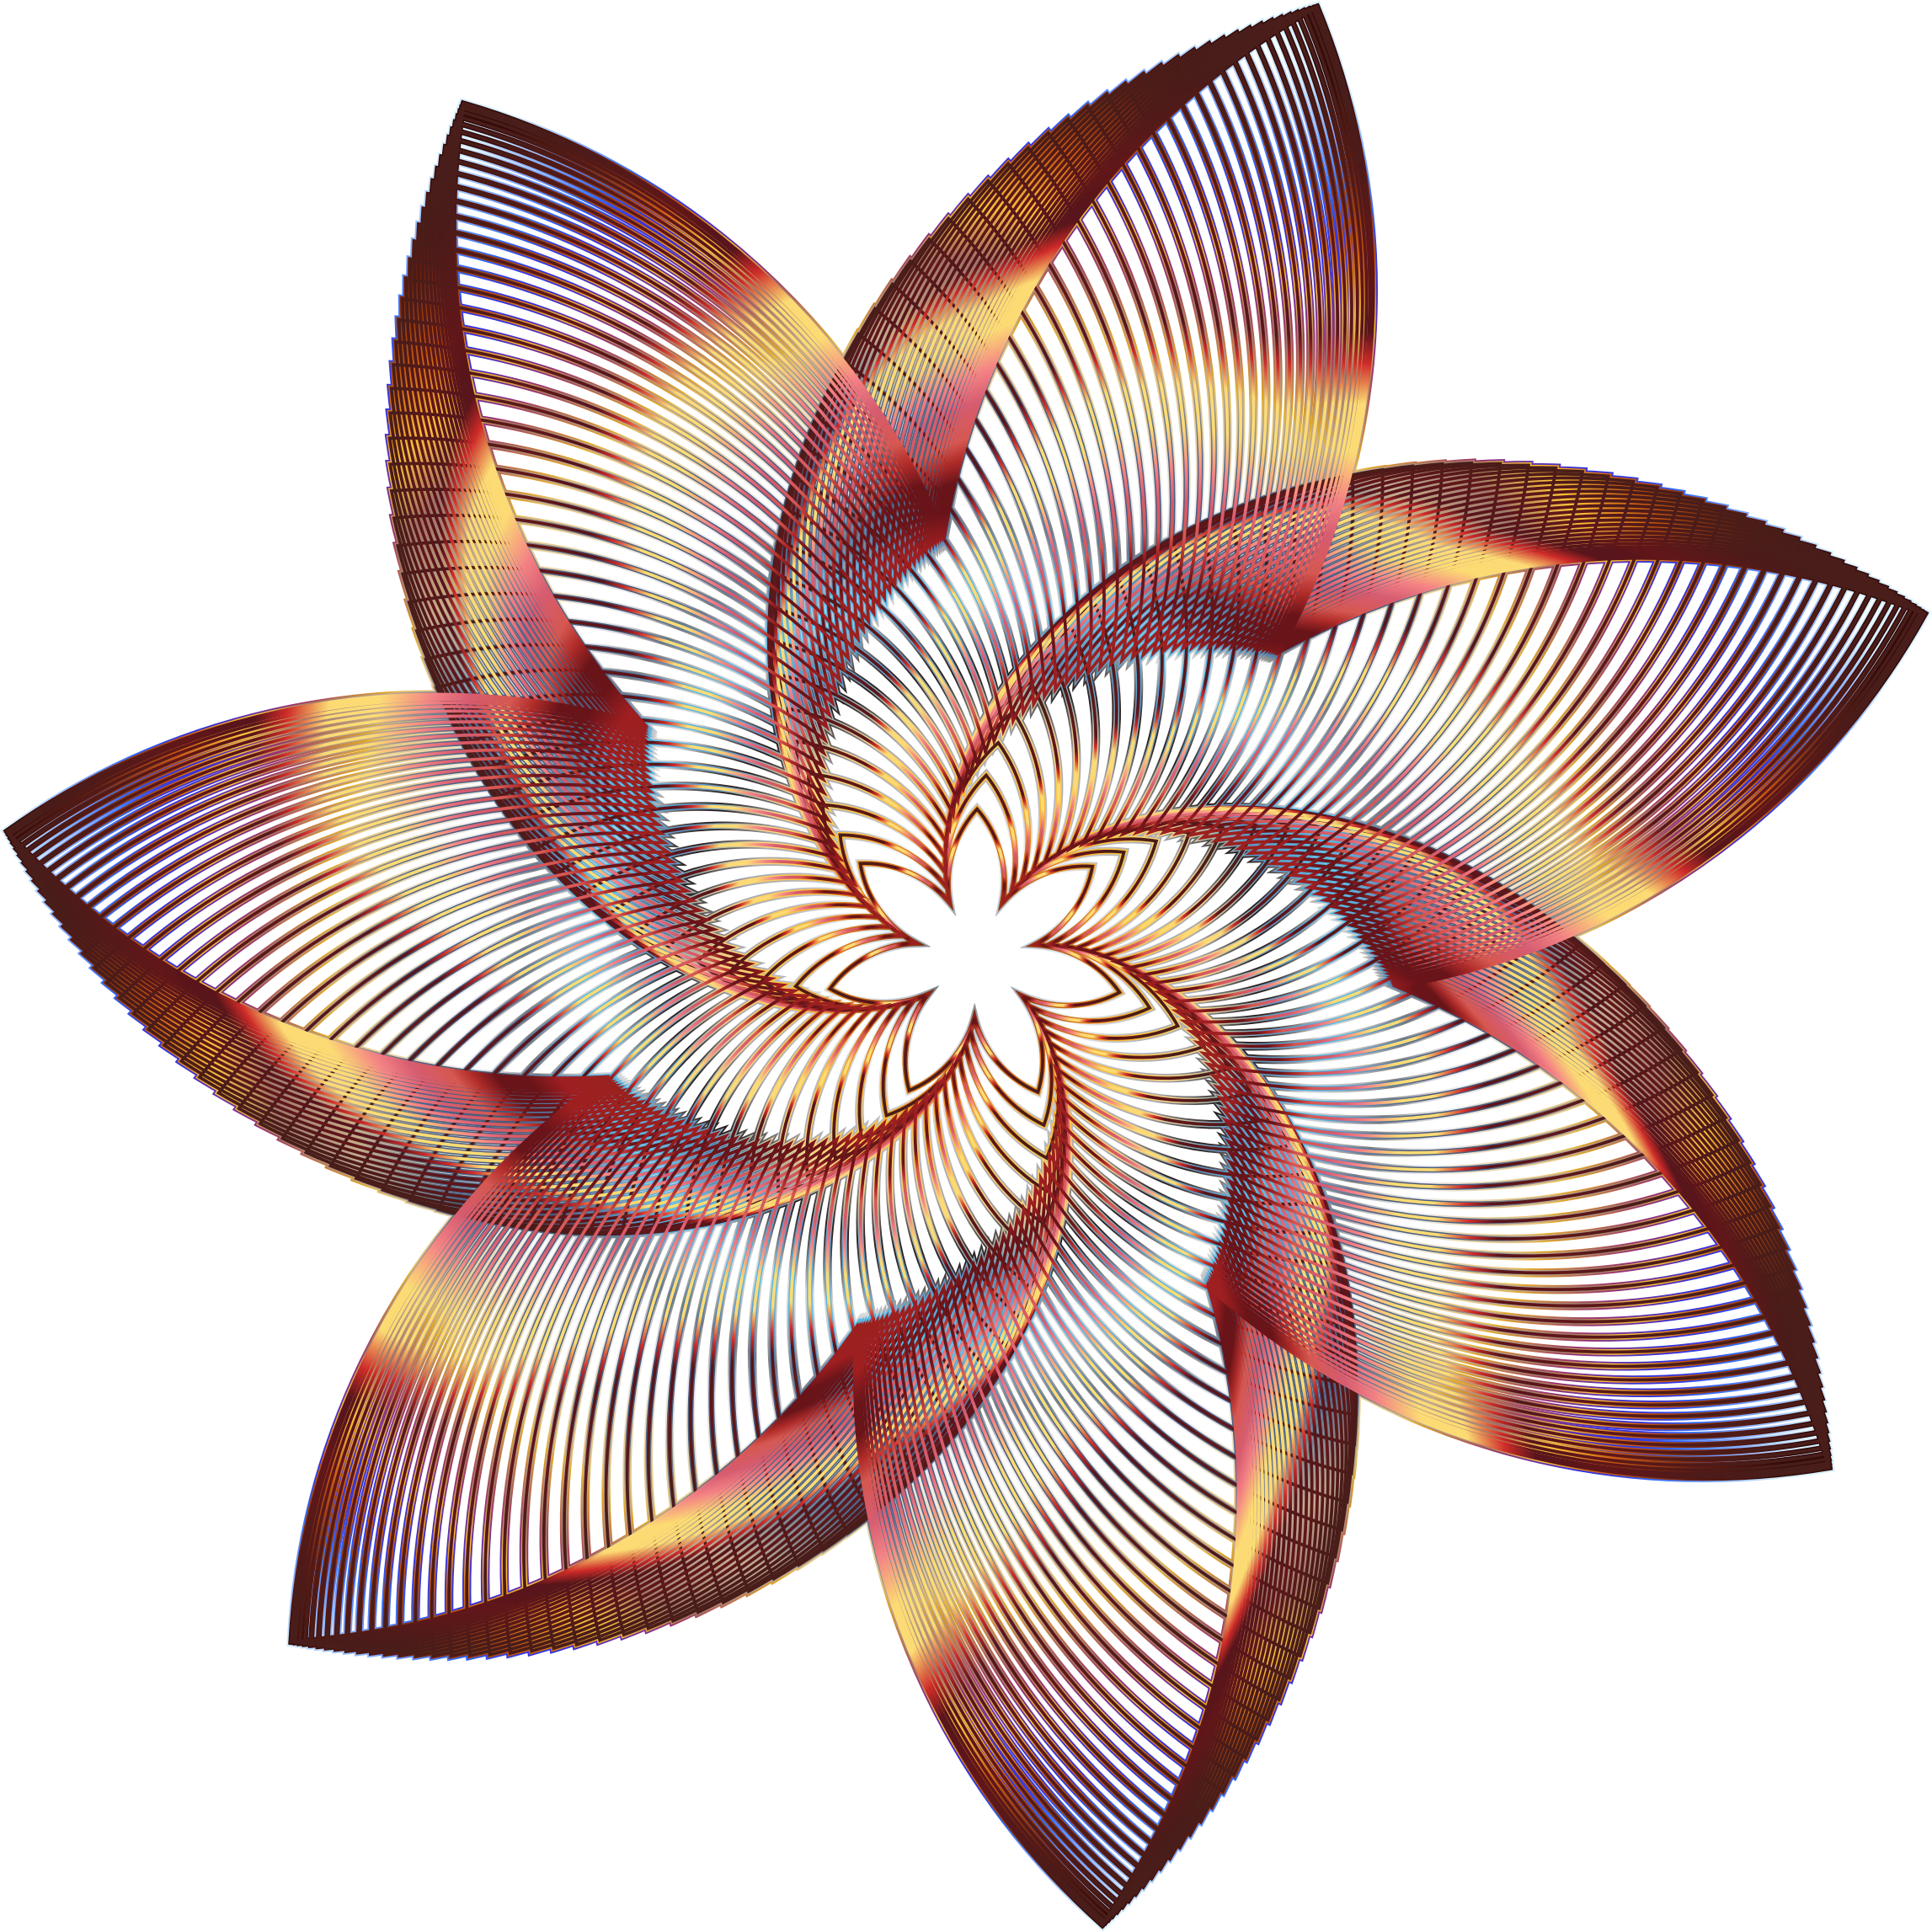 Flower Line Art 5 No Background - Portable Network Graphics (2294x2294)